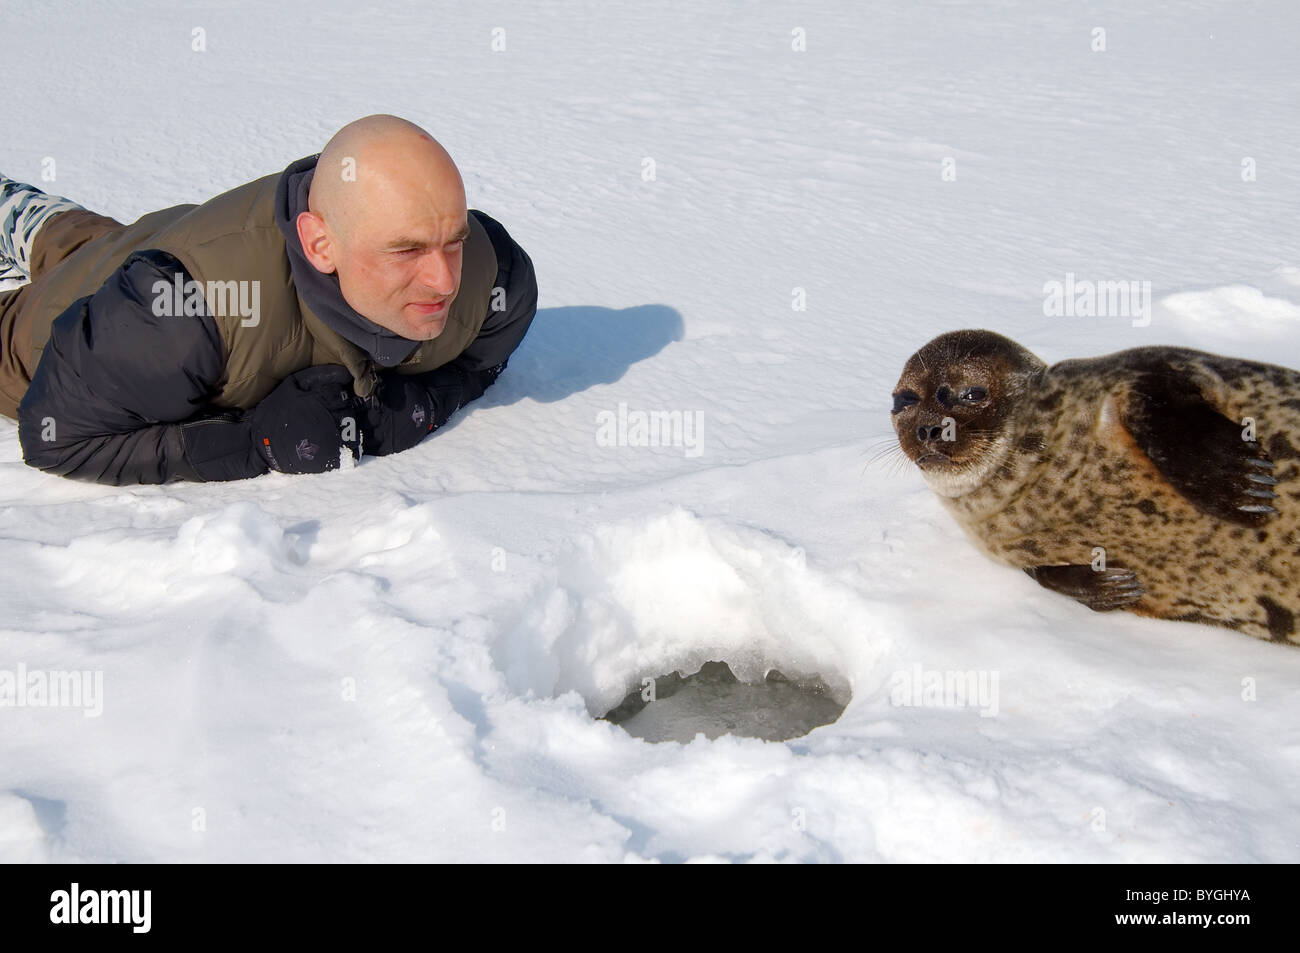 Man lies on the snow and looks at Ringed seal near ice-hole. Jar seal, netsik or nattiq (Pusa hispida), White Sea, Arctic, Russia Stock Photo